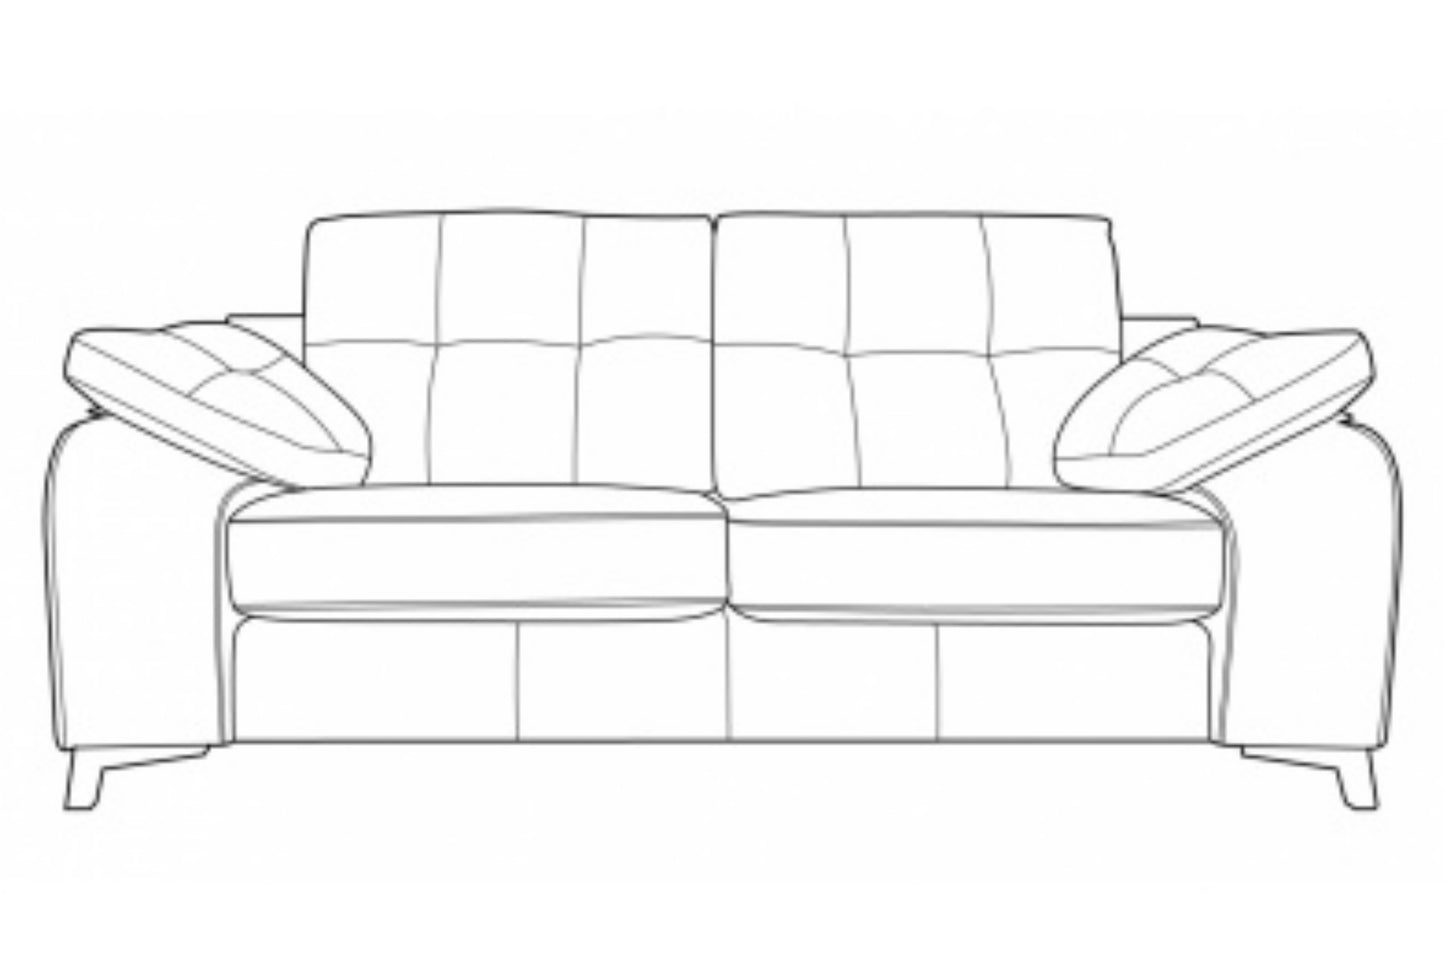 The Bonanza Range - 2 Seater Sofa